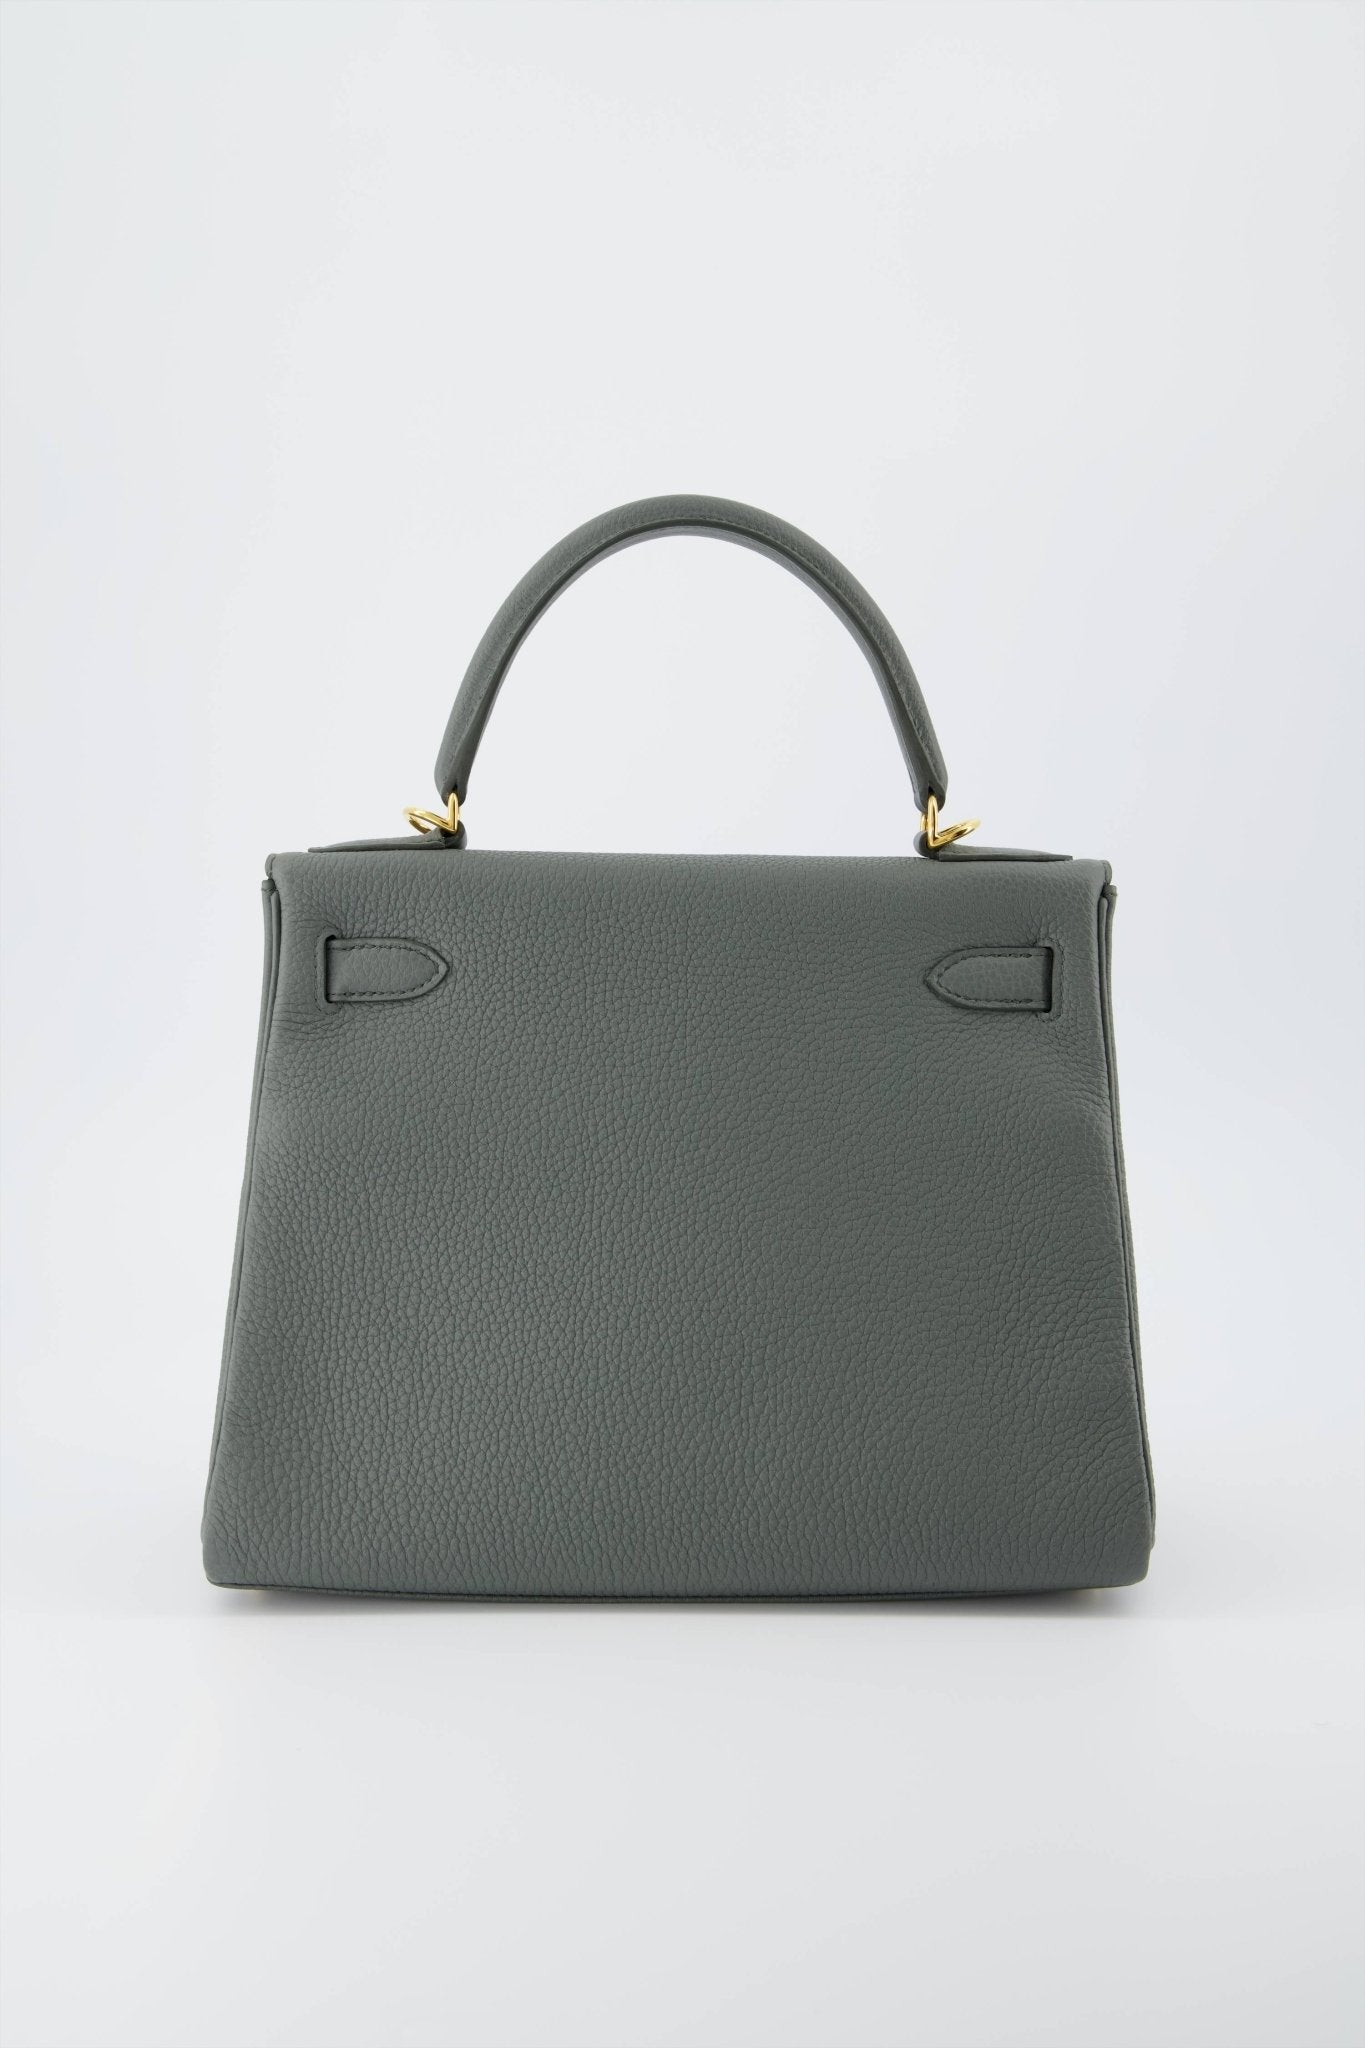 Hermes Kelly 28 Returnee Handbag Vert Amande Togo Leather With